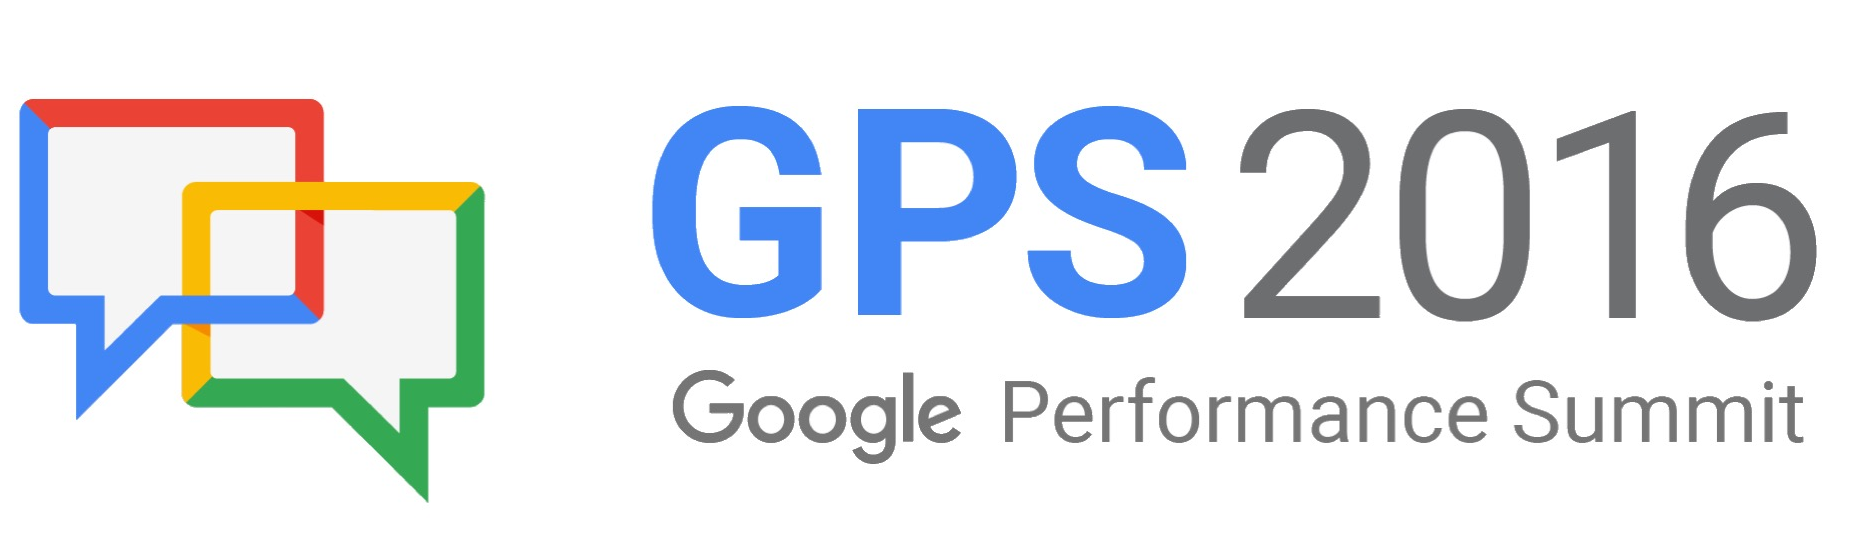 google performance summit 2016